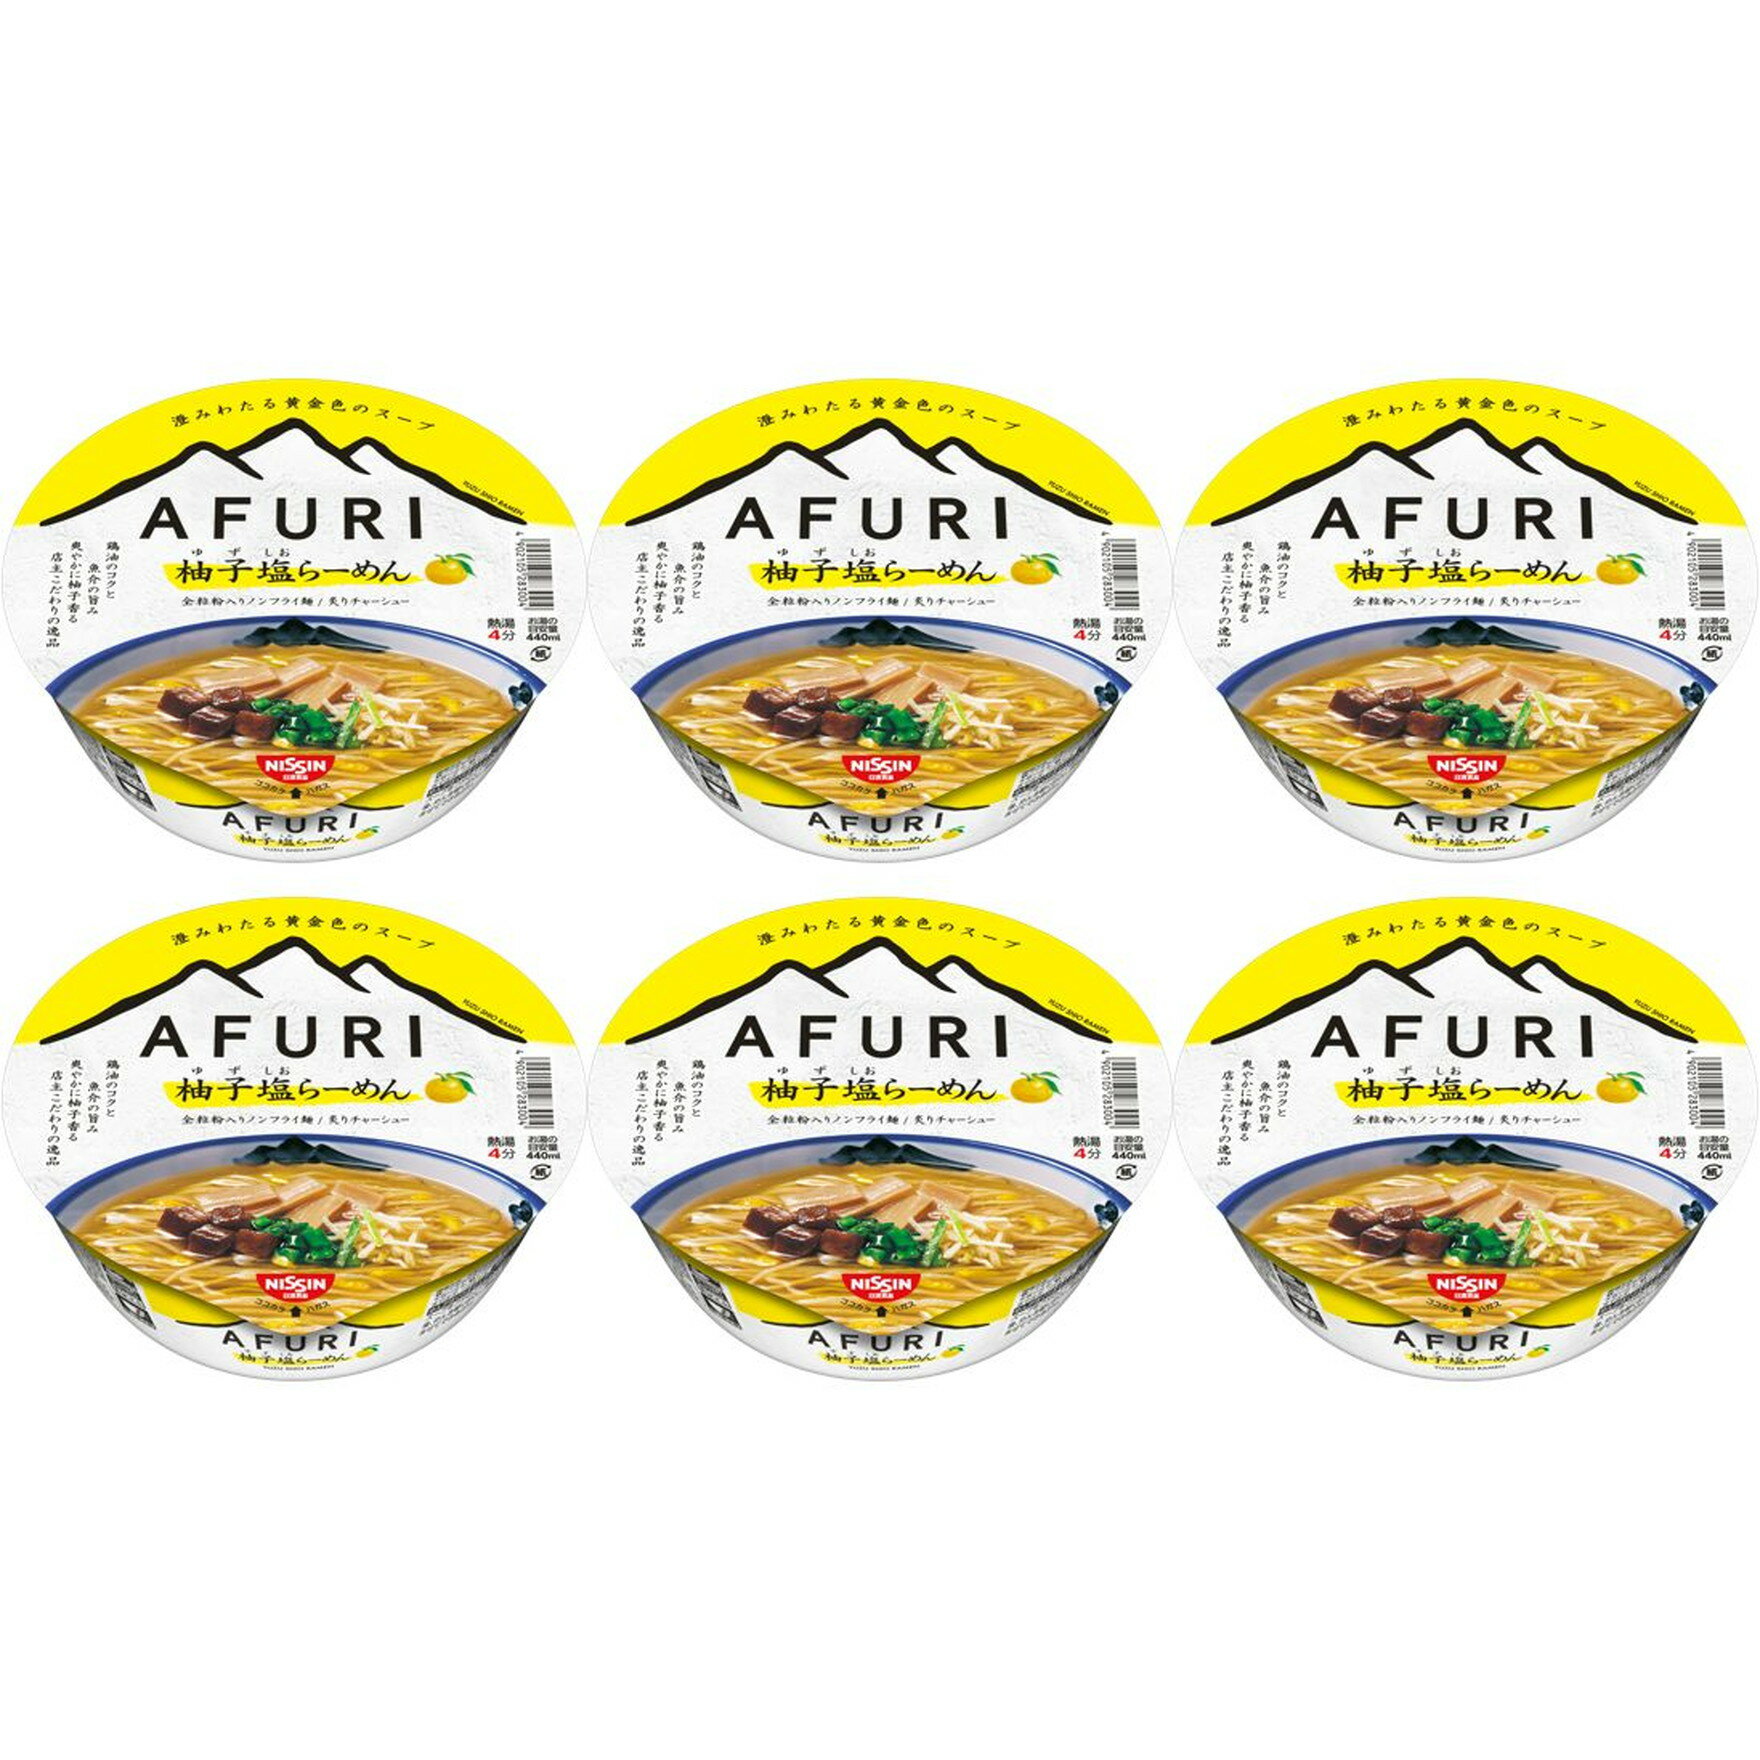 AFURI ラーメン 6個セット 日清食品 AFURI 柚子塩らーめん 阿夫利 ゆずしお 92gカップ 6個